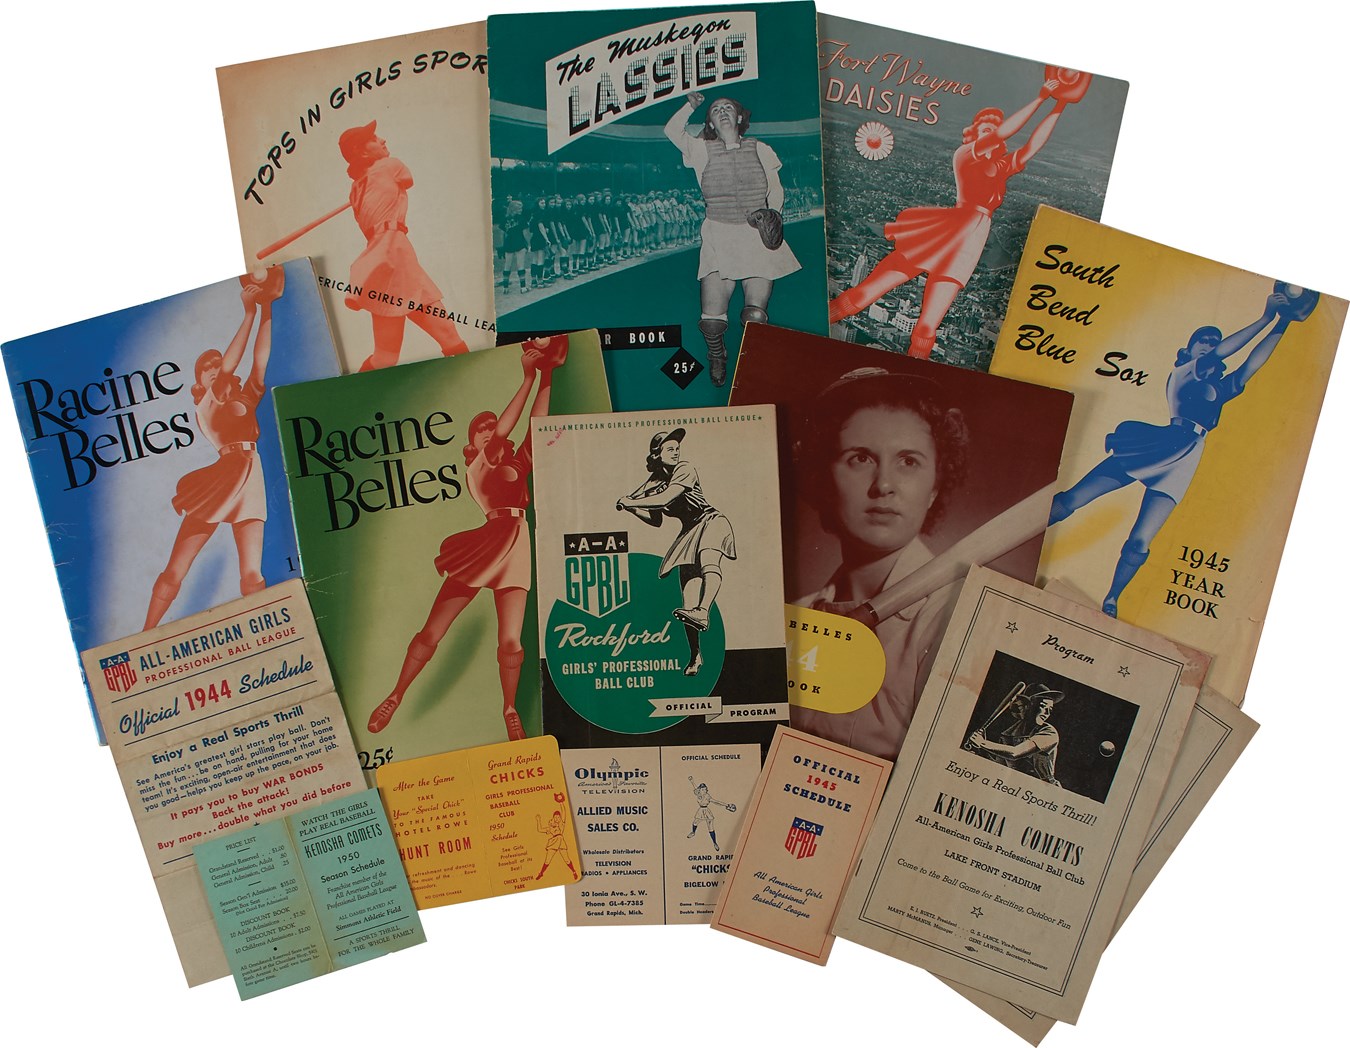 Negro League, Latin, Japanese & Int'l Baseball - 1940s All American Girls Professional Baseball League Archive (16)